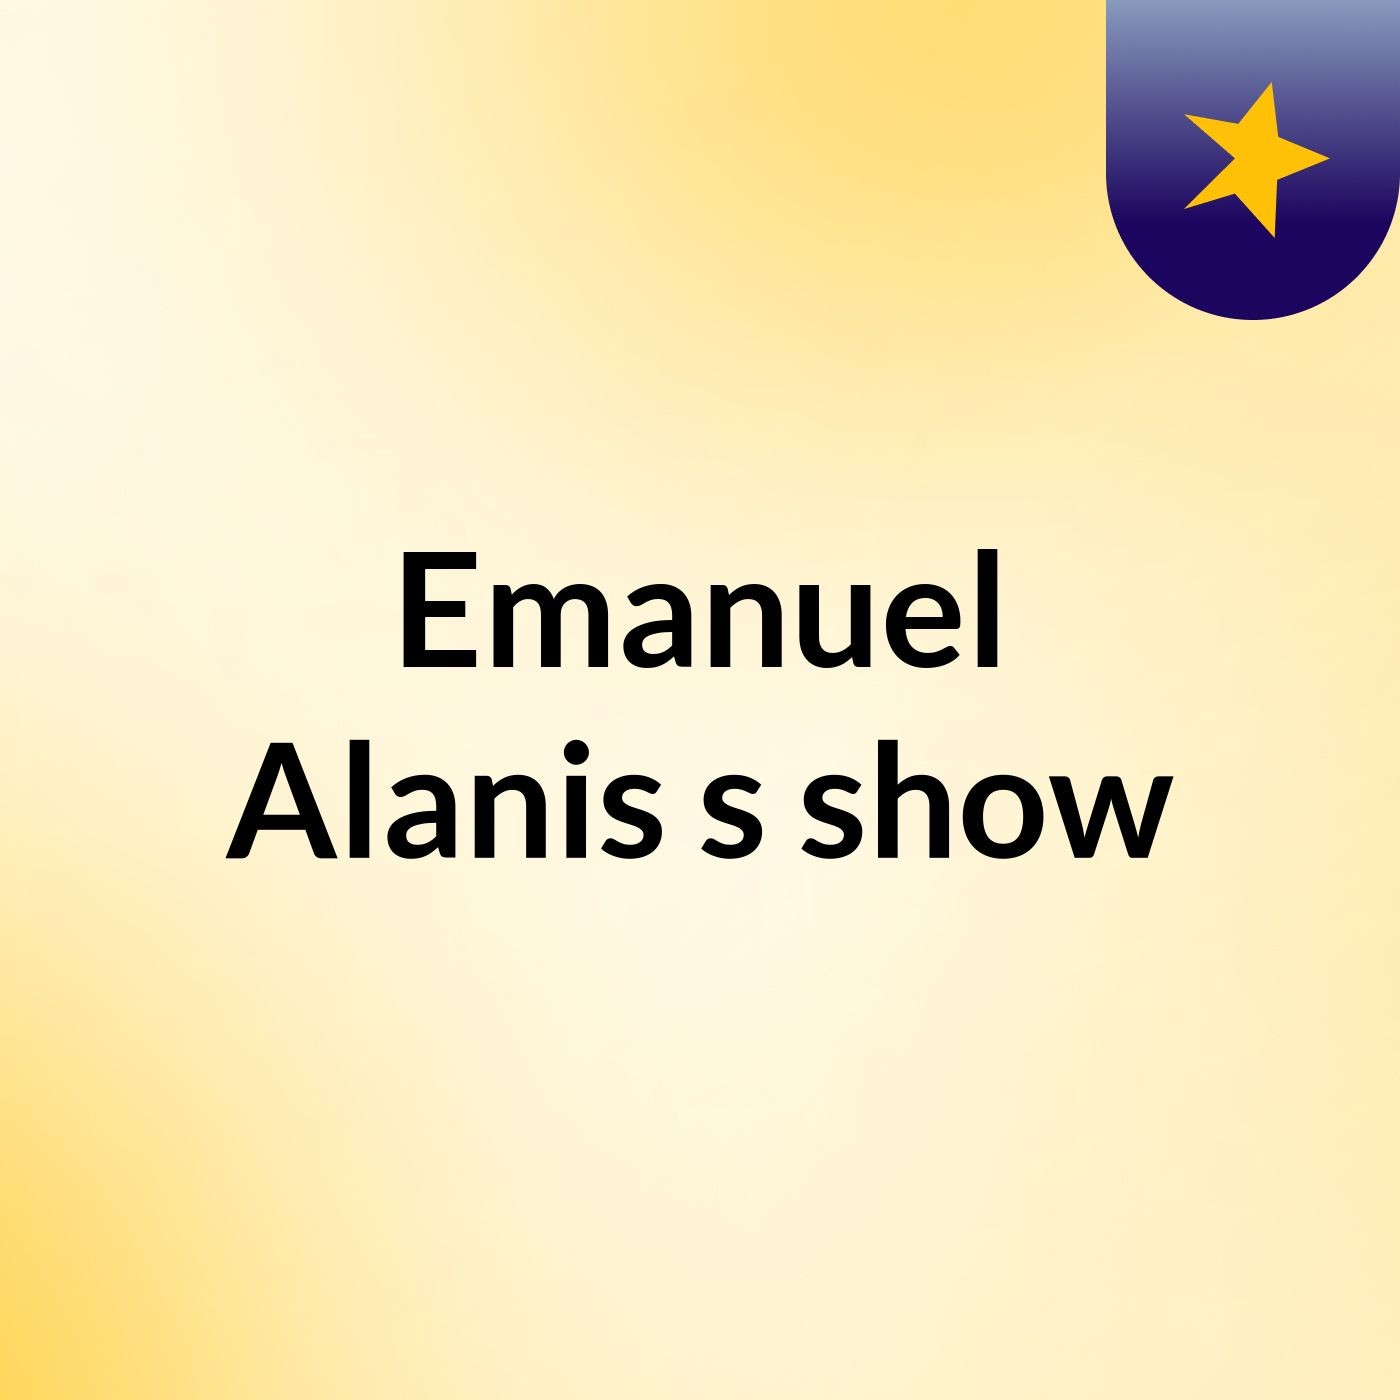 Emanuel Alanis's show